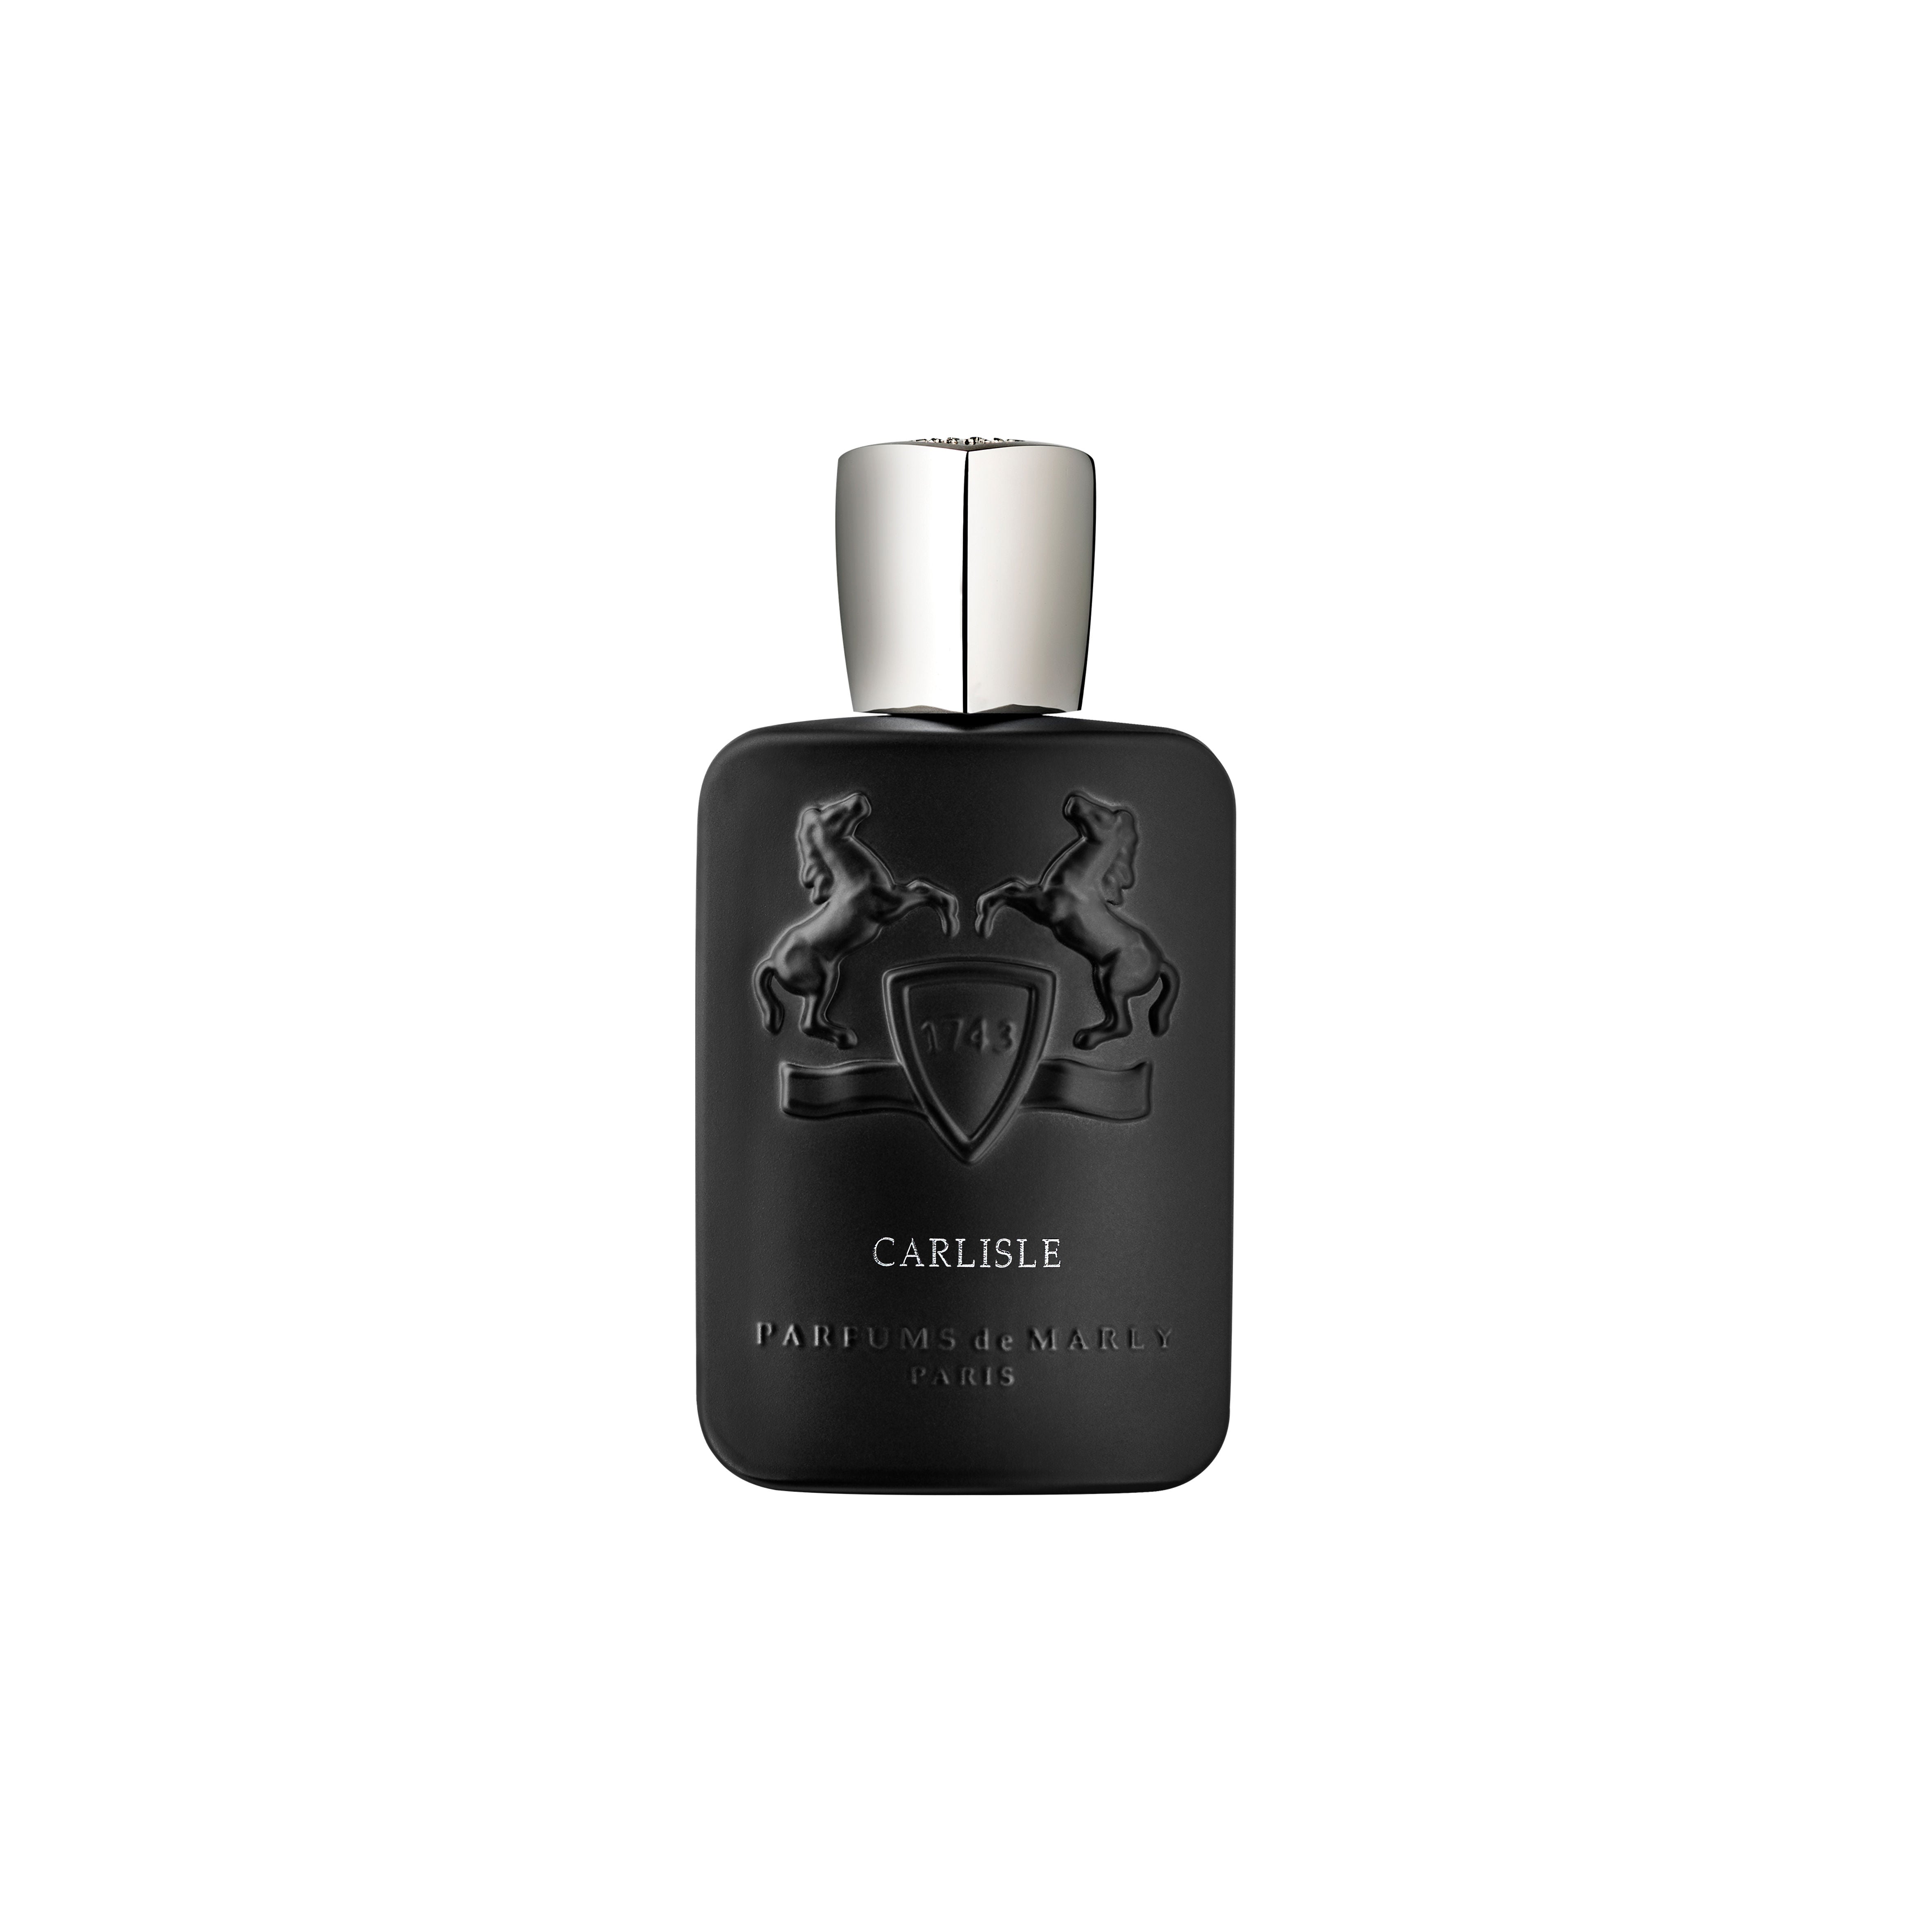 Carlisle Eau de Parfum main image.